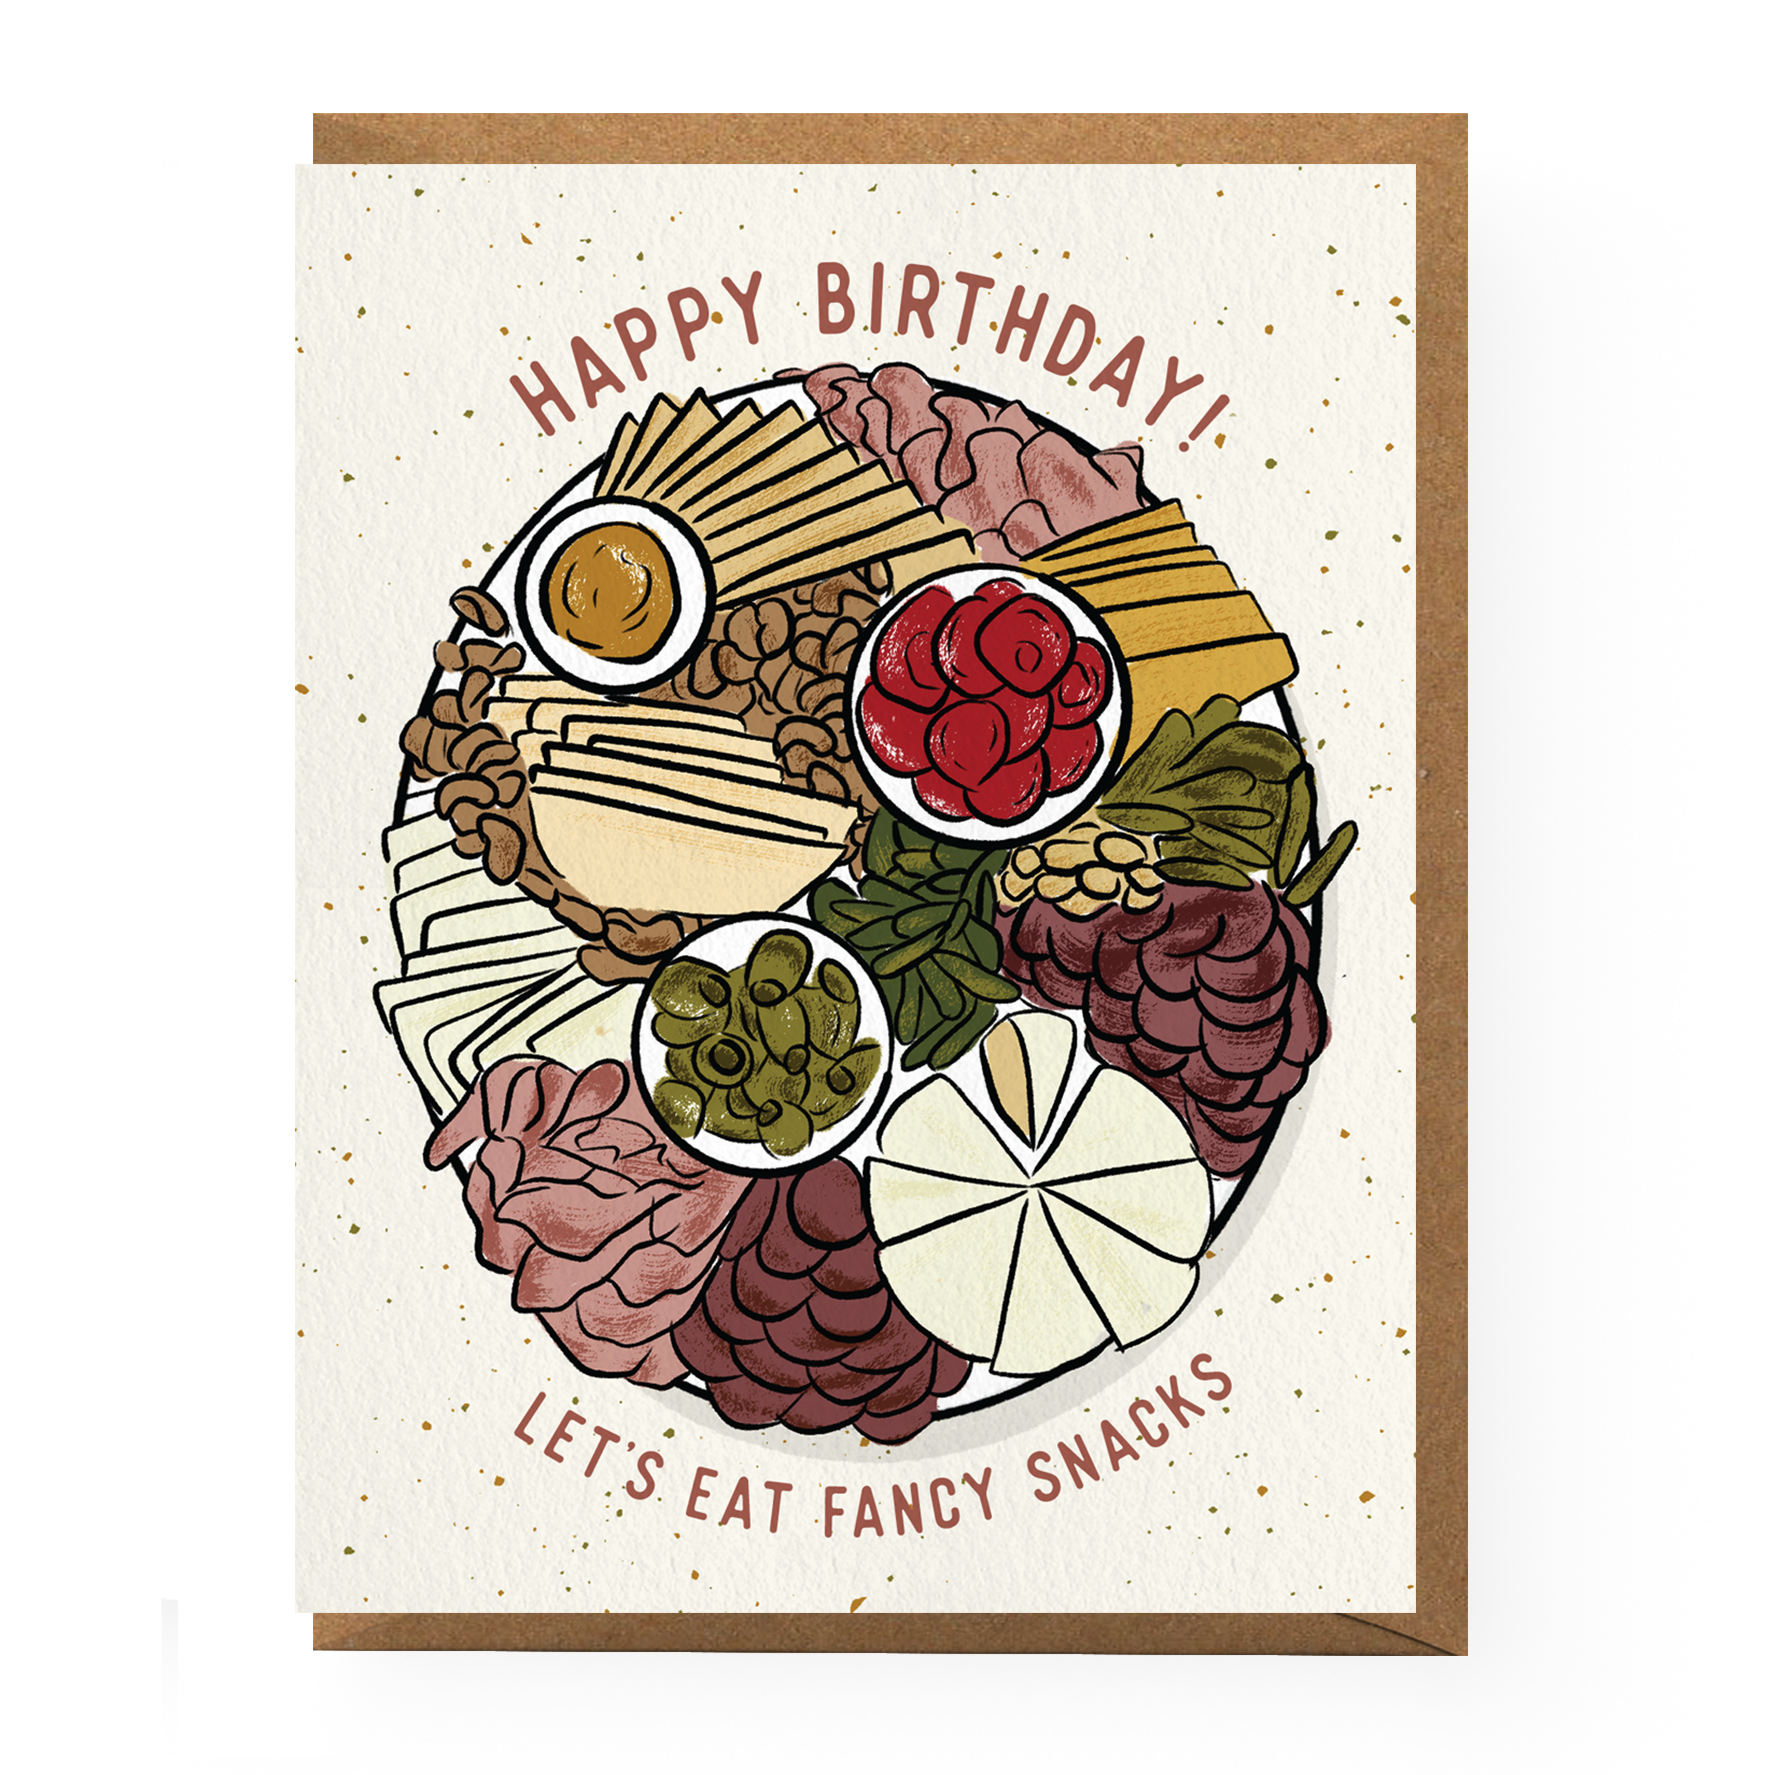 Happy Birthday - Let's Eat Fancy Snacks (Charcuterie) - Birthday Greeting Card